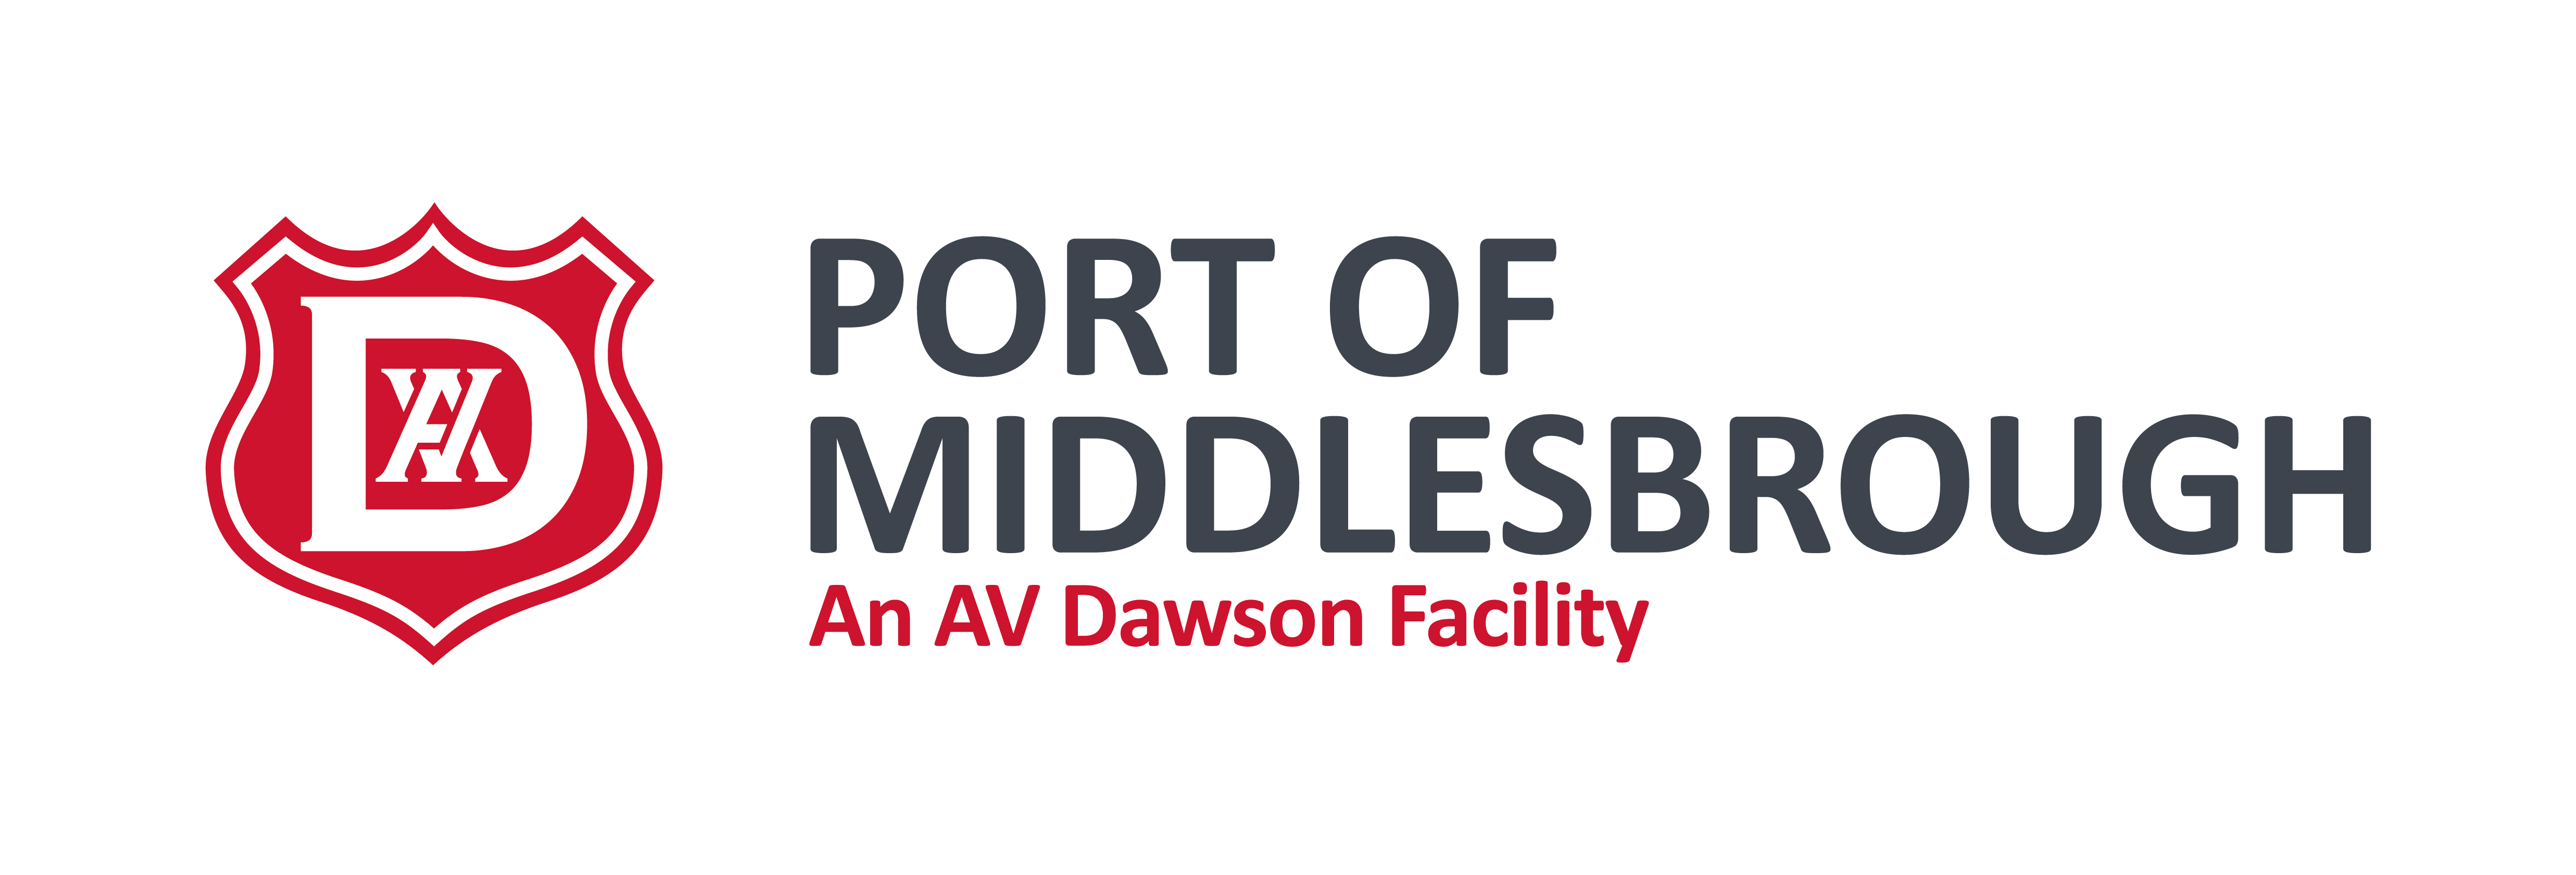 Port of Middlesbrough – An AV Dawson Facility